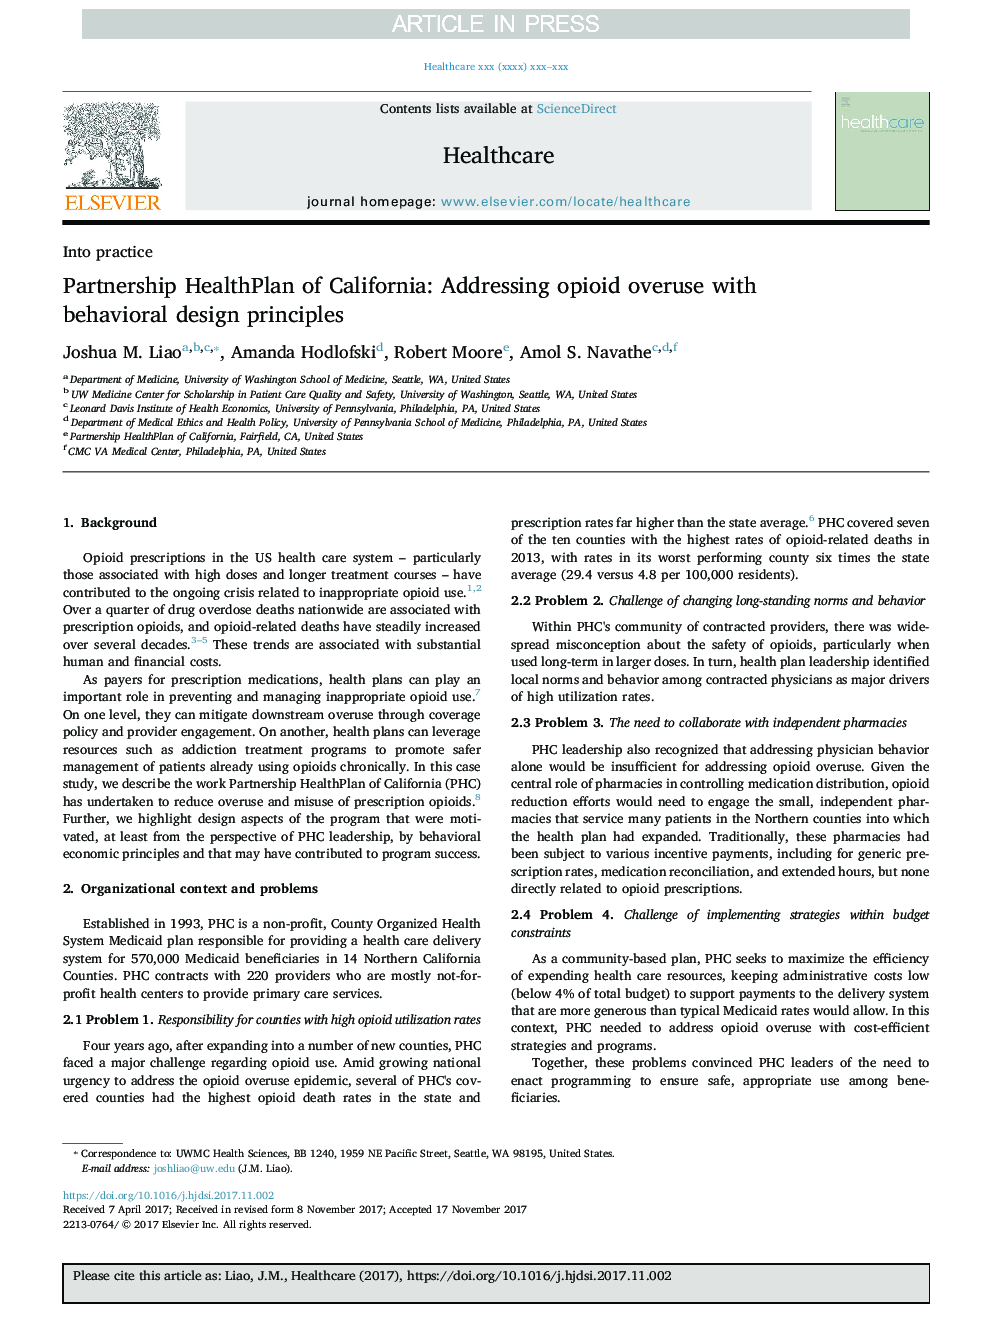 Partnership HealthPlan of California: Addressing opioid overuse with behavioral design principles